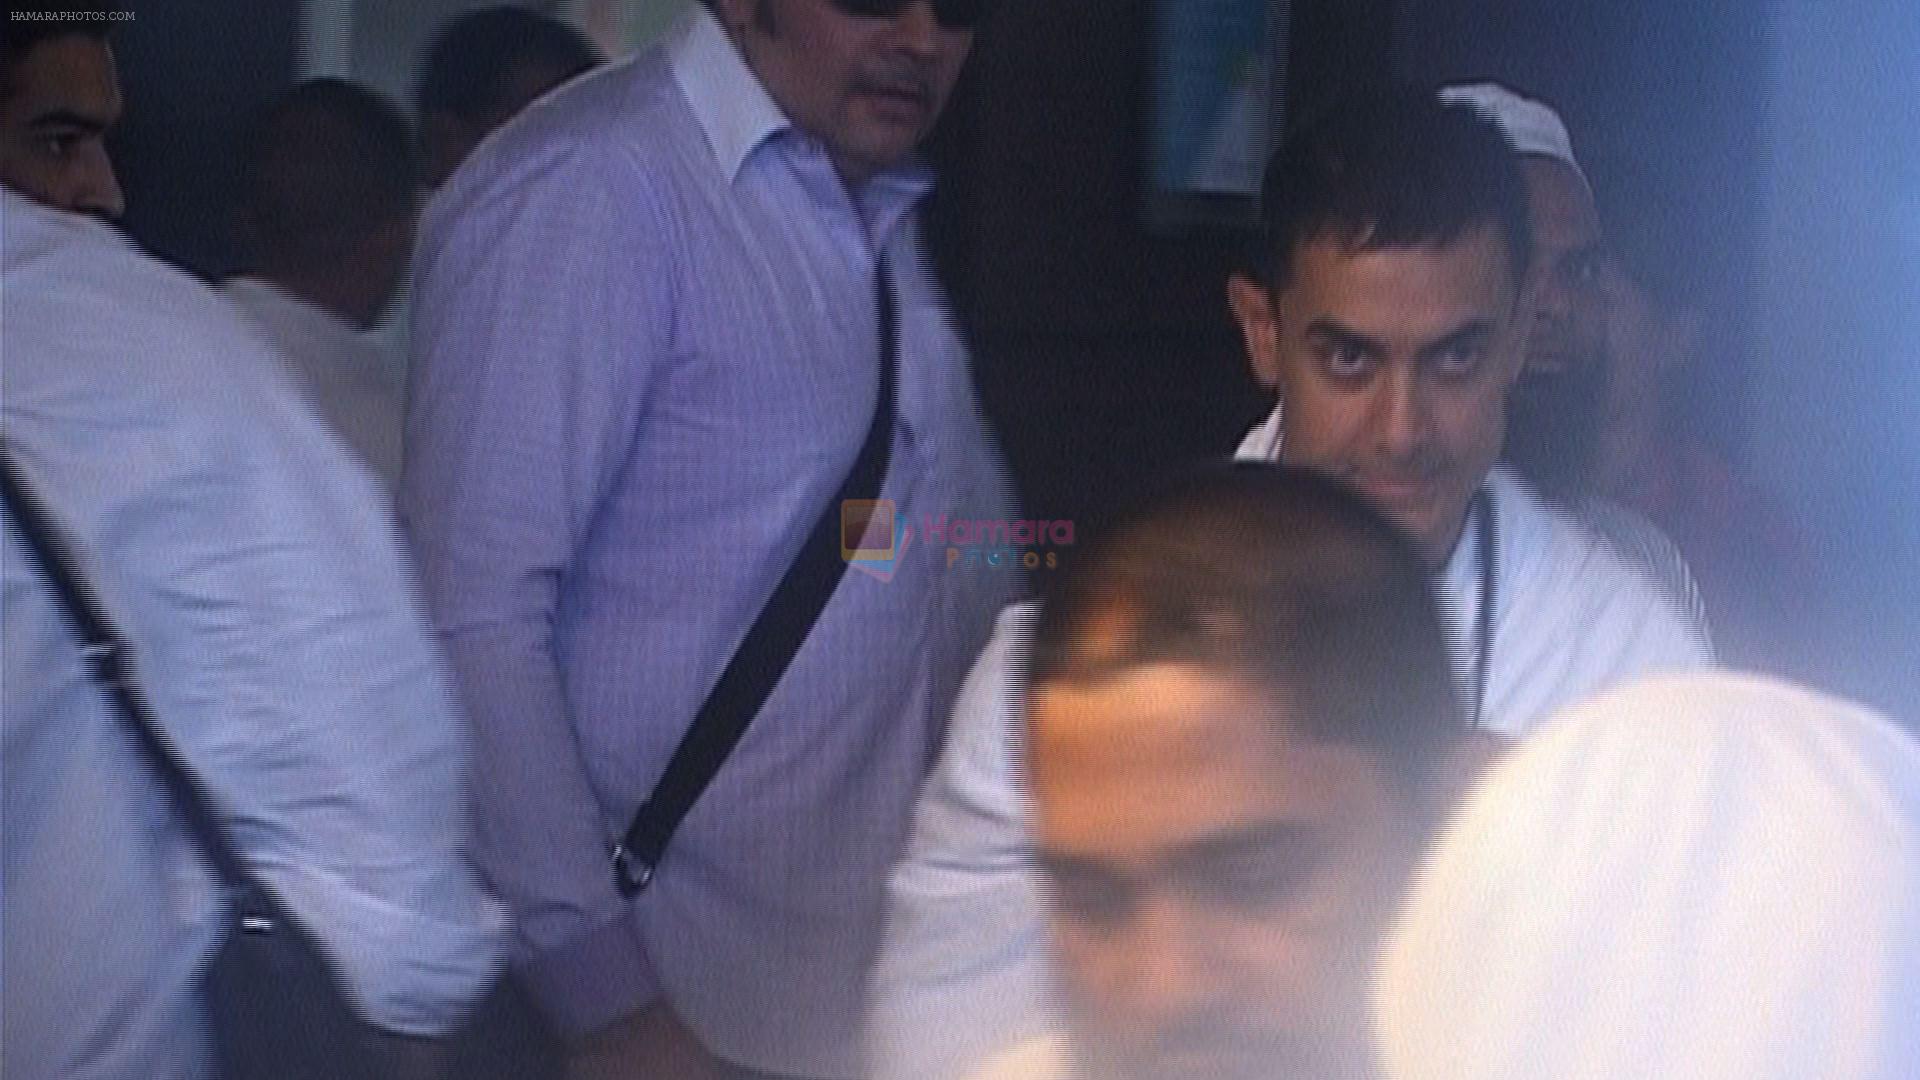 Aamir khan departs for hajj yatra in Mumbai on 22nd Oct 2012